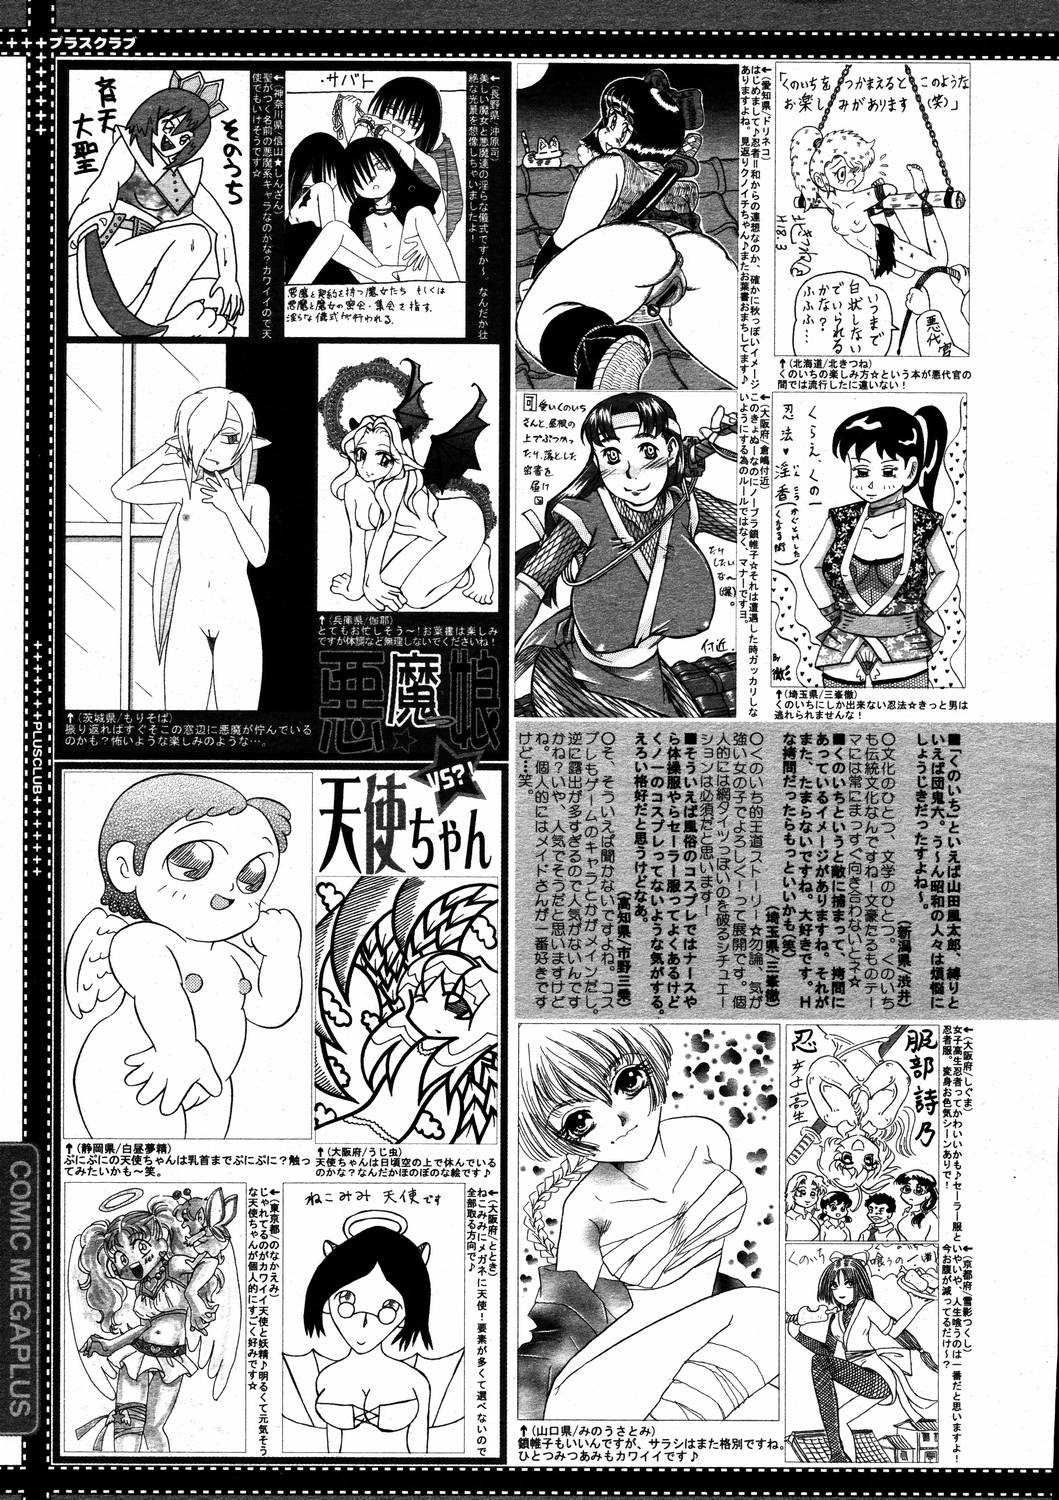 [Anthology] [2006-04-10] COMIC MEGAPLUS Vol.31 (2006-05) 